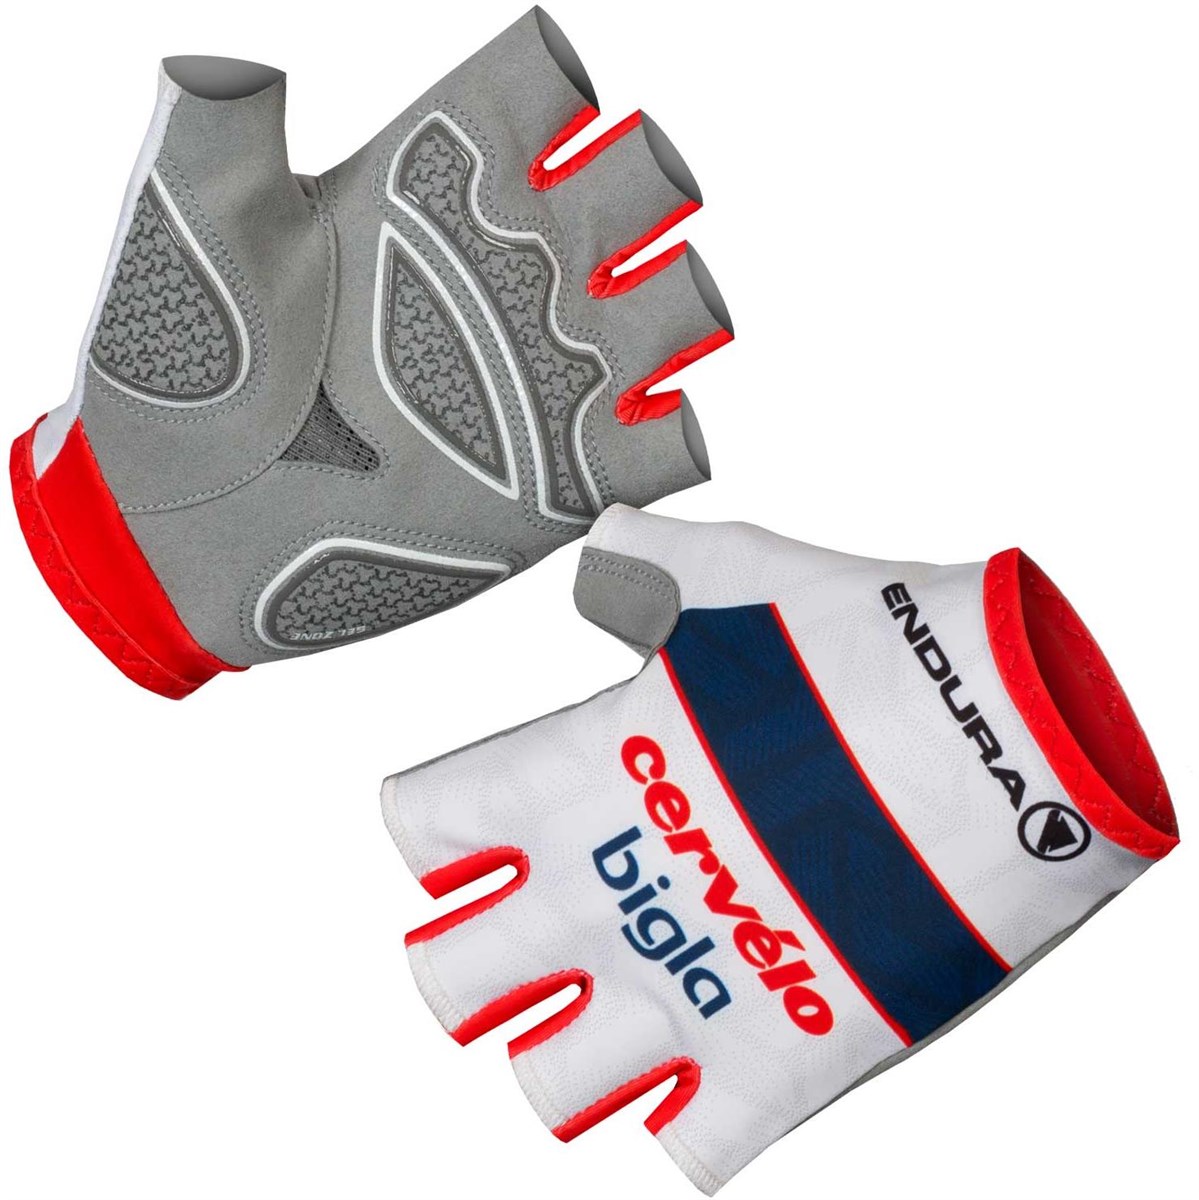 Endura Cervelo Bigla Team Race Mitts / Gloves product image